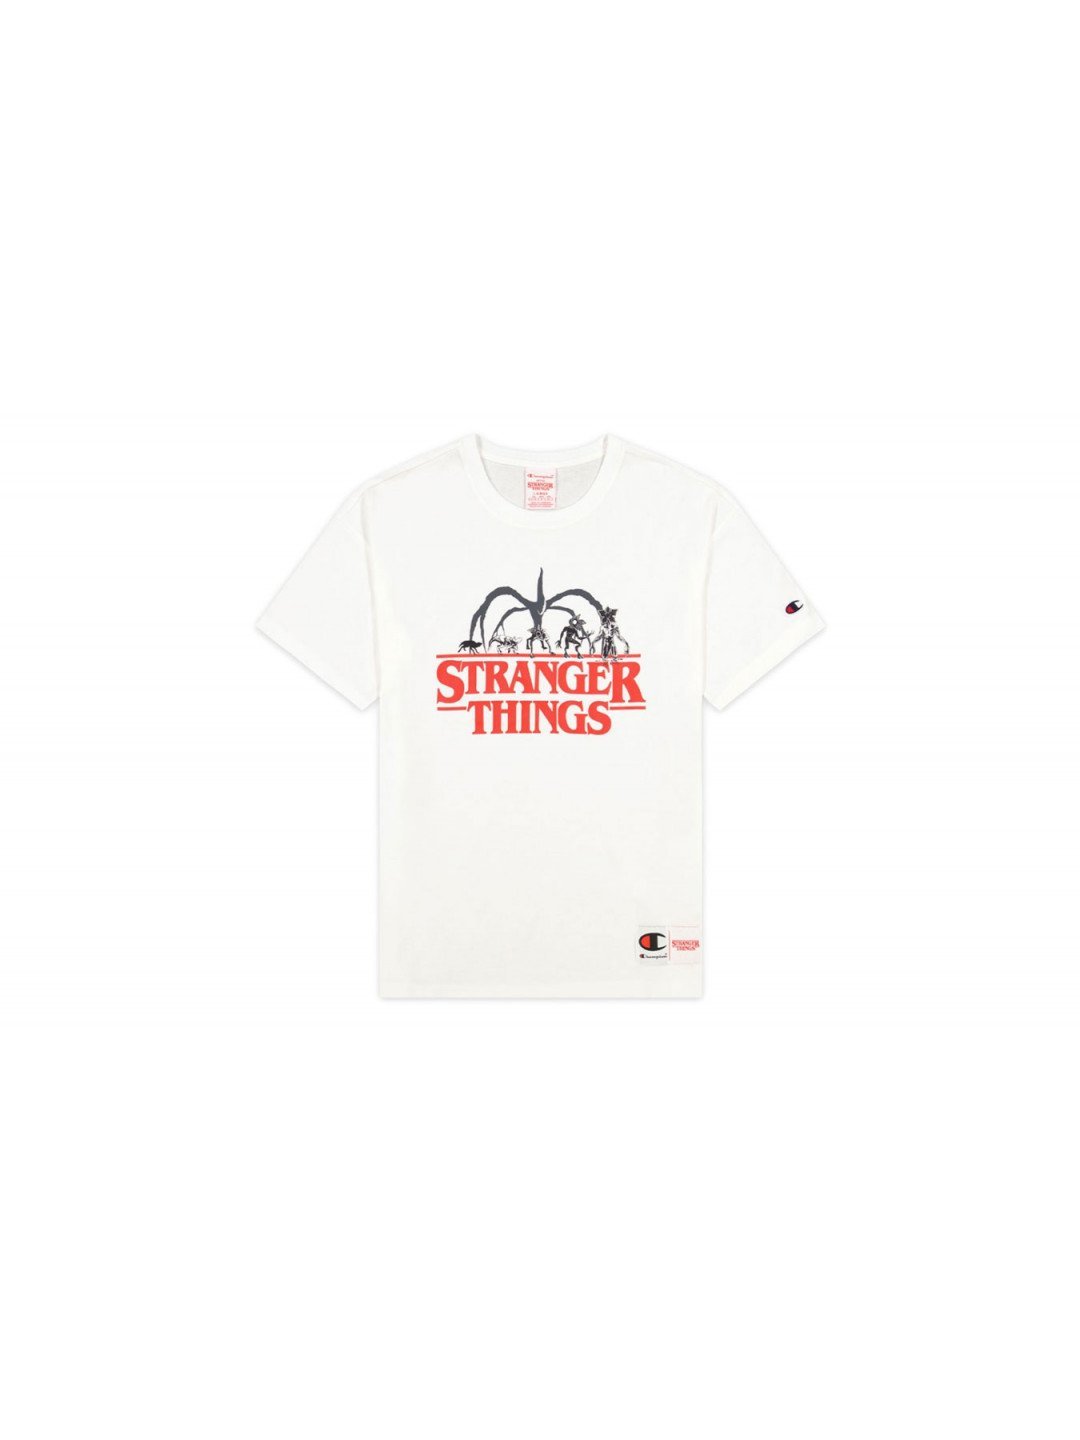 Champion x Stranger Things Men s T-Shirt